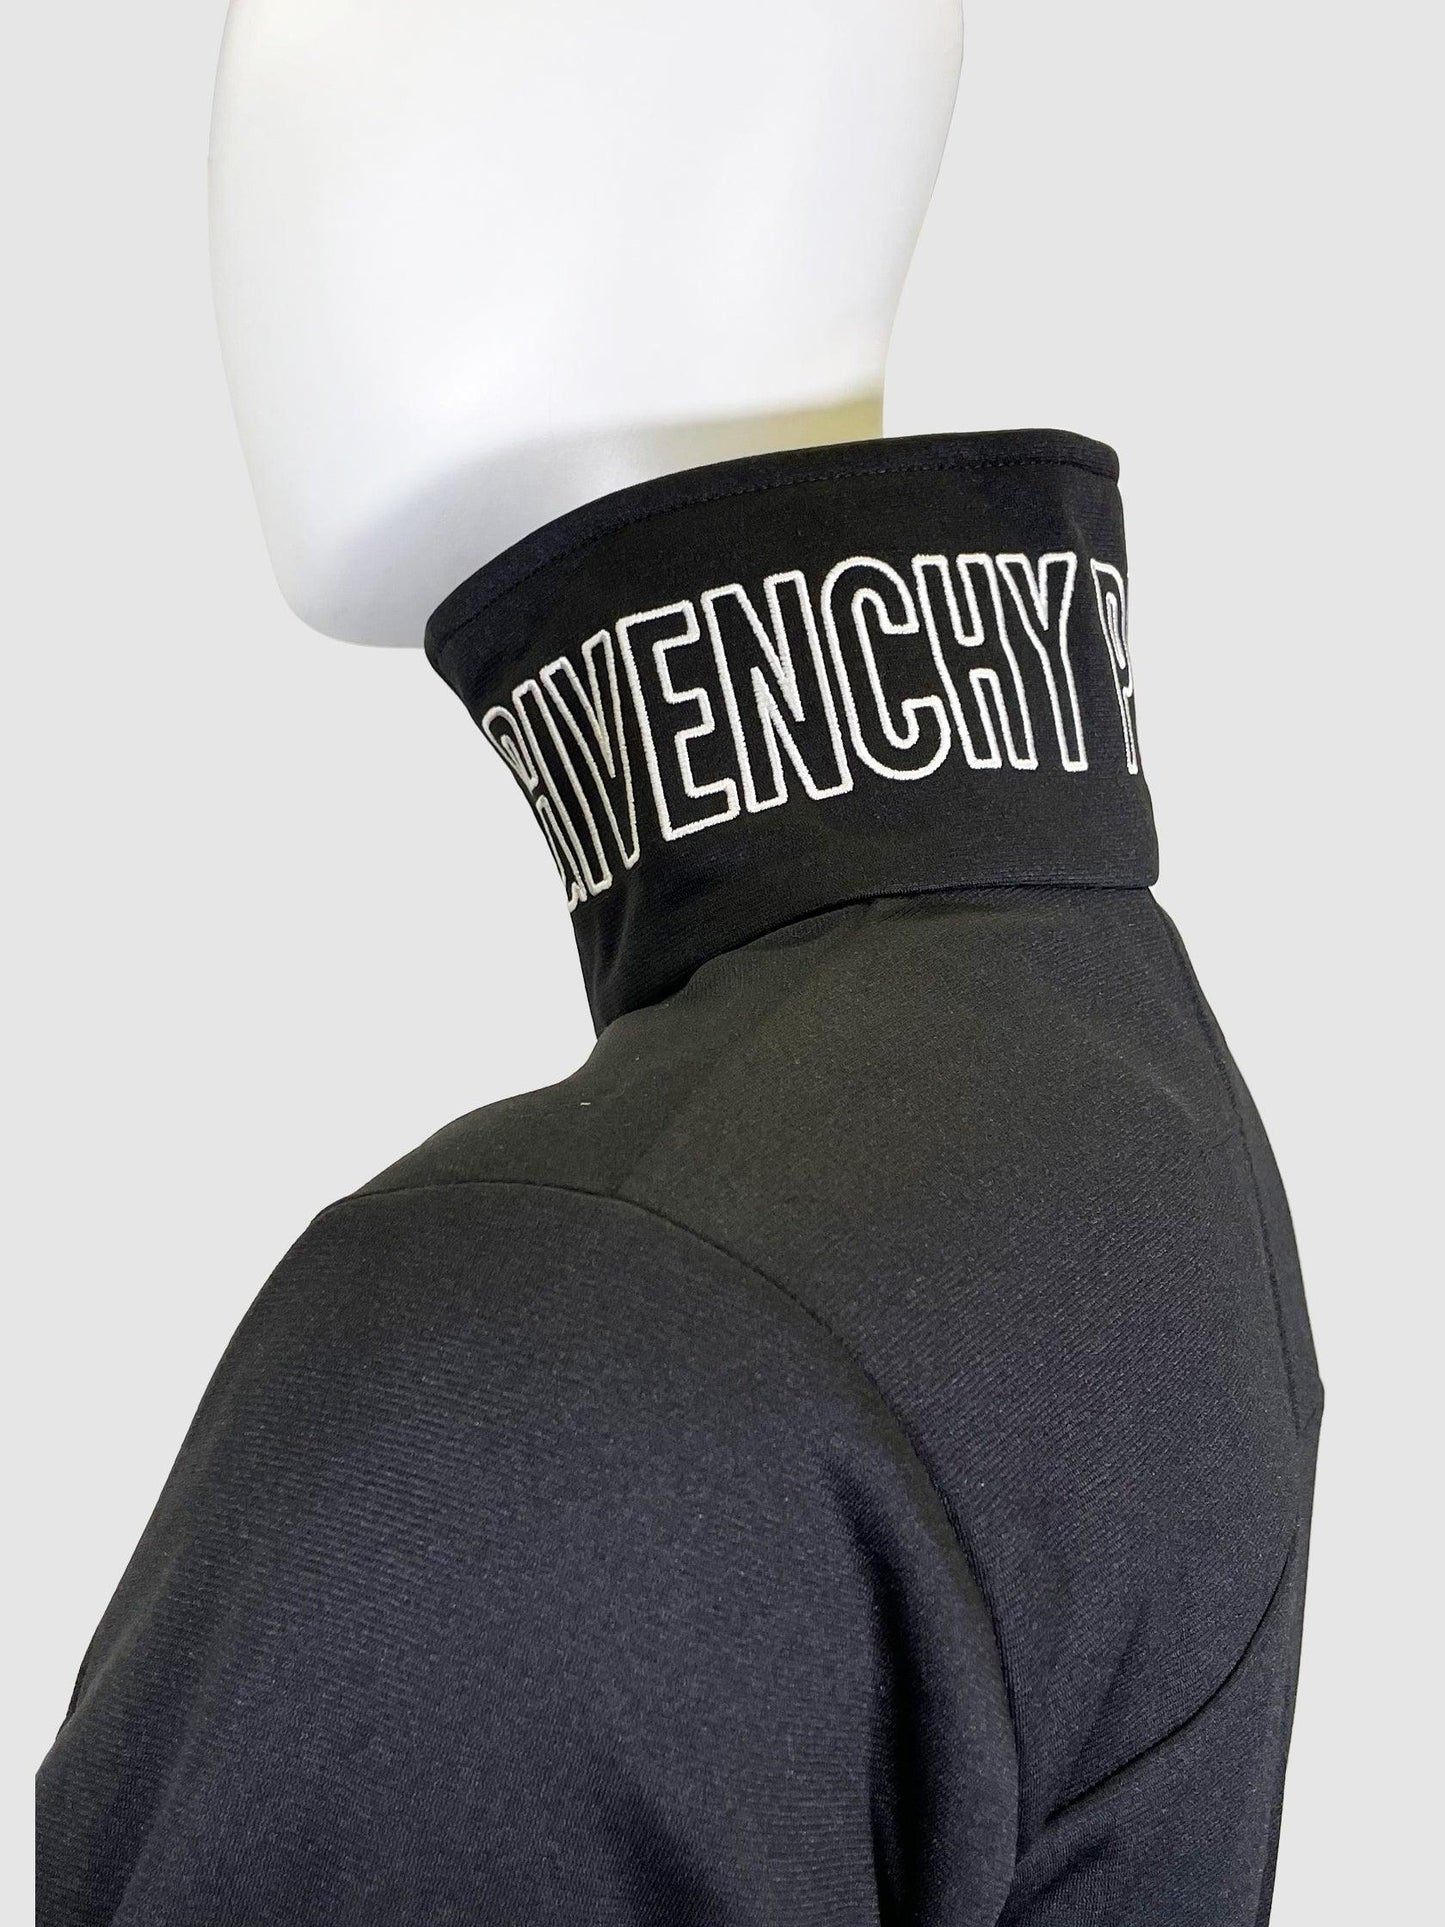 Givenchy - Size 36 - Second Nature Boutique